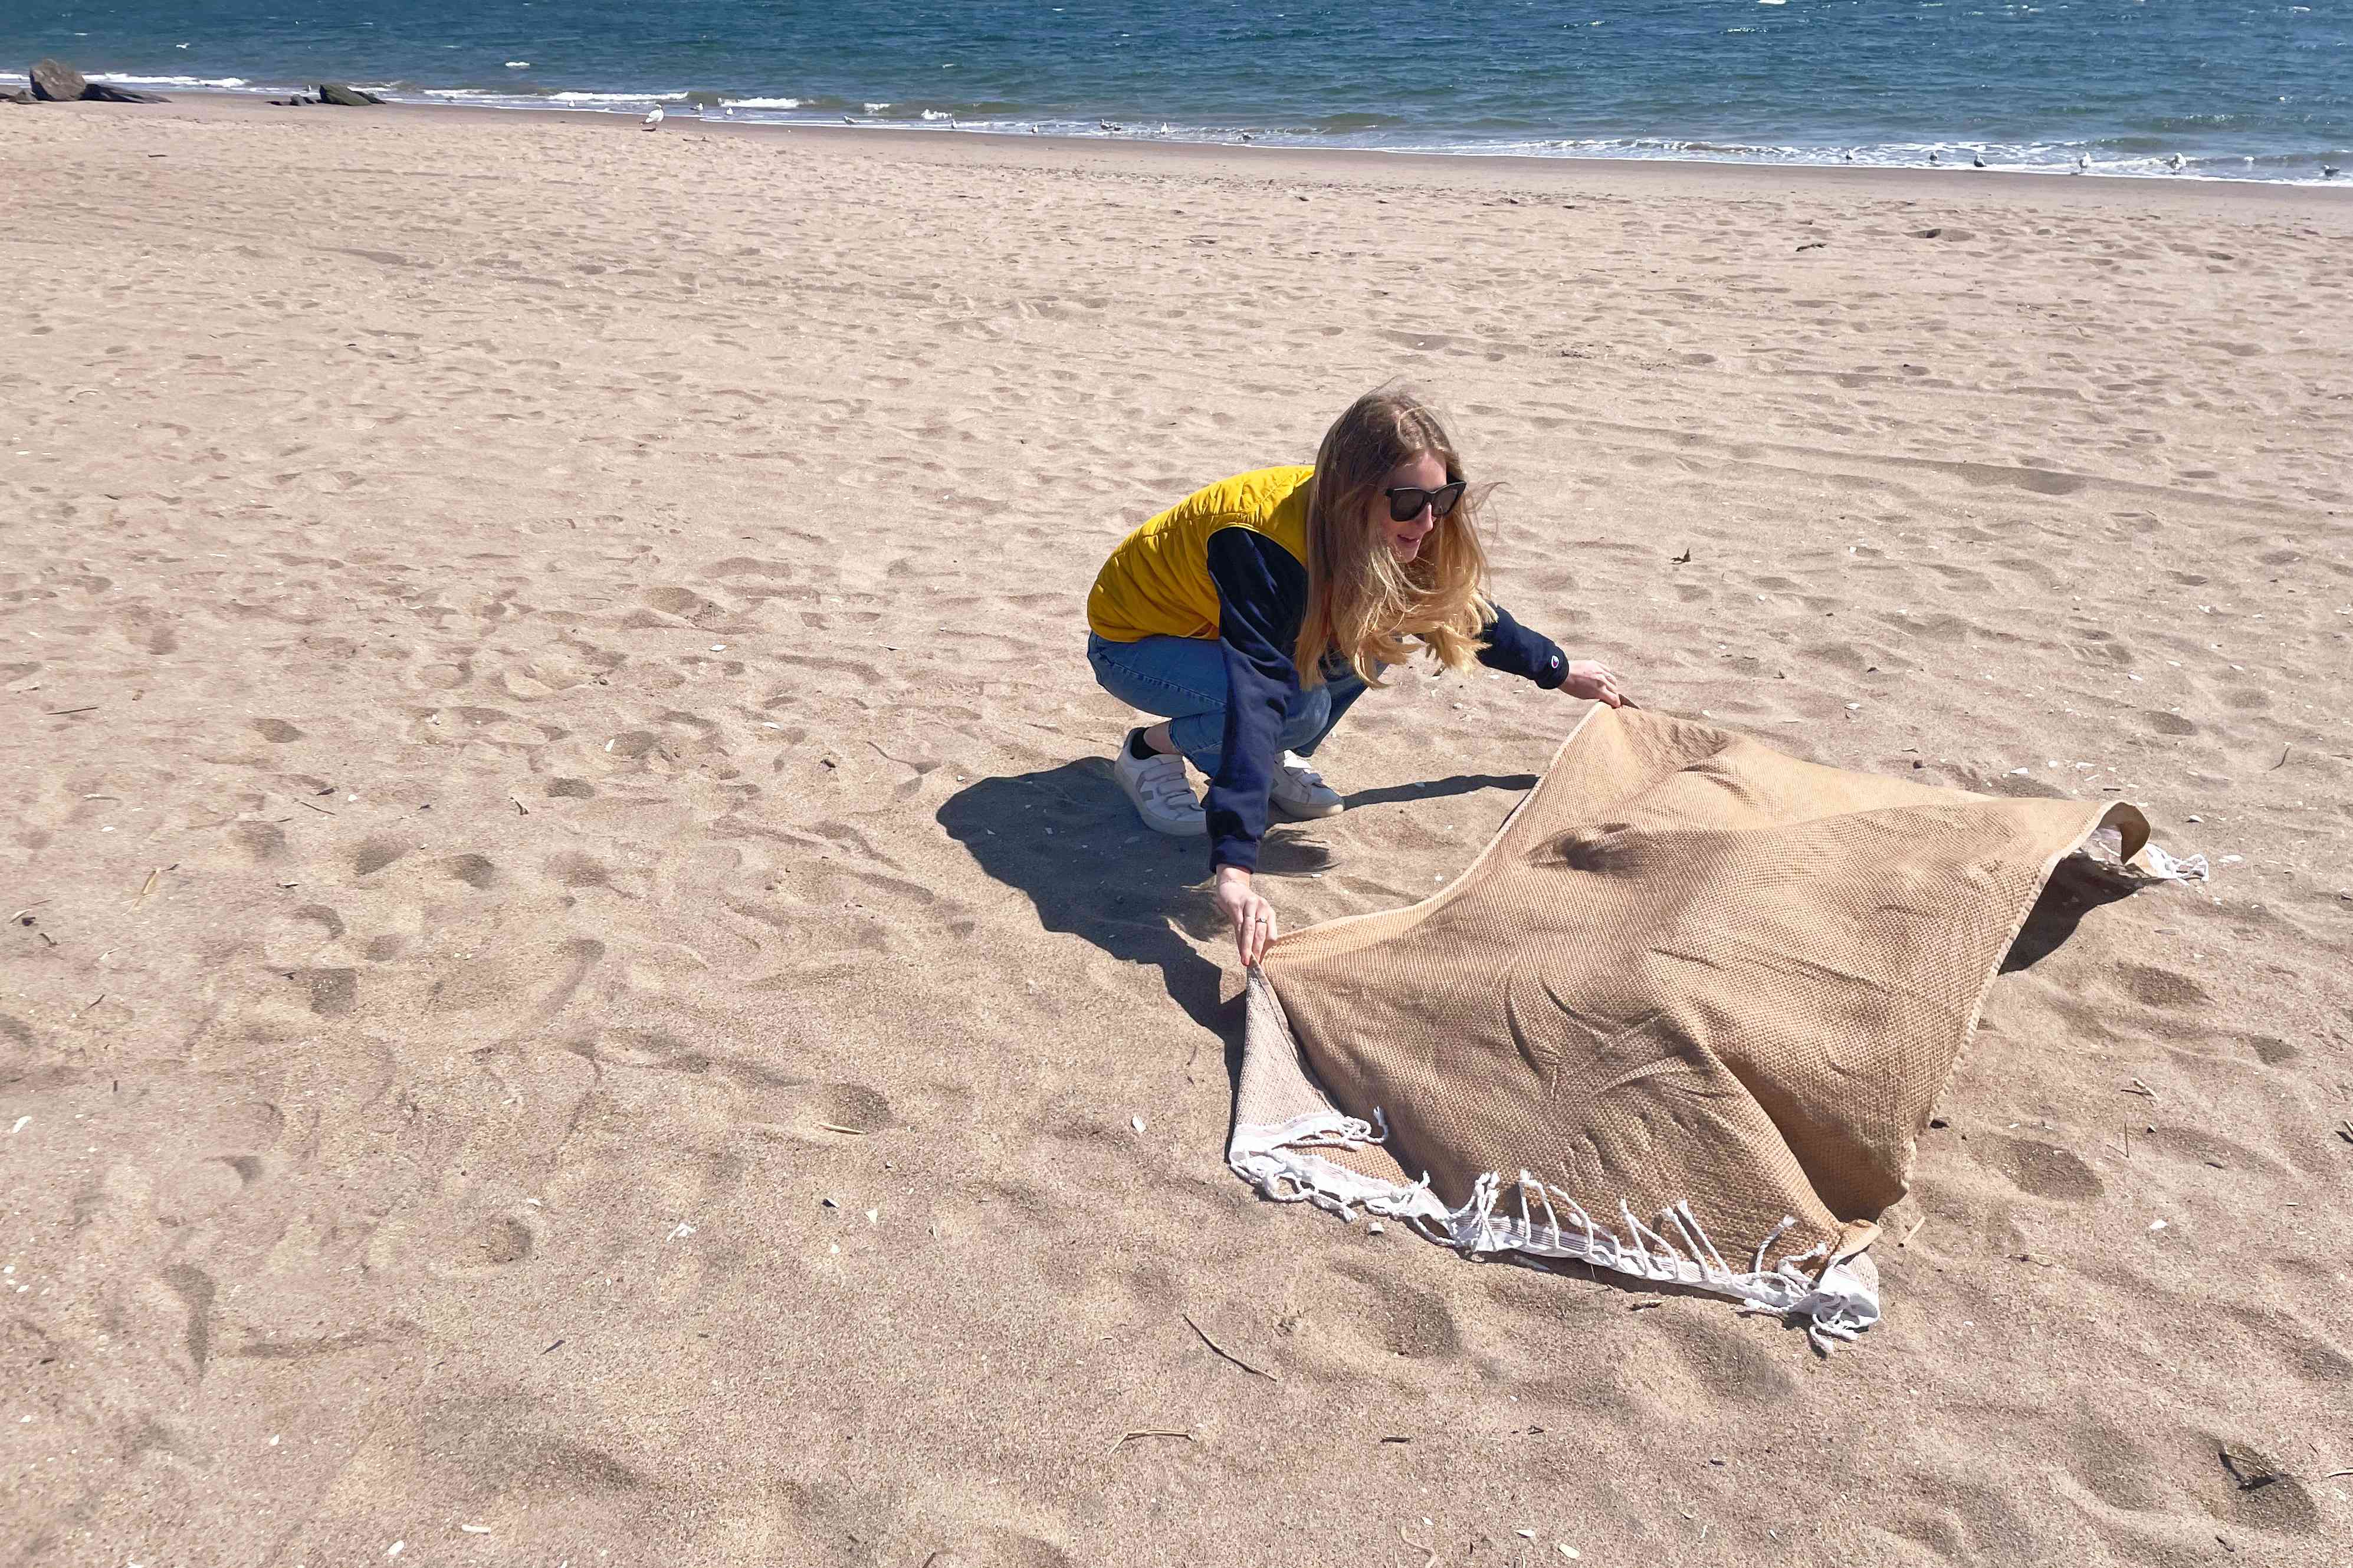 A person puts the Coyuchi Mediterranean Organic Towel on a sandy beach.